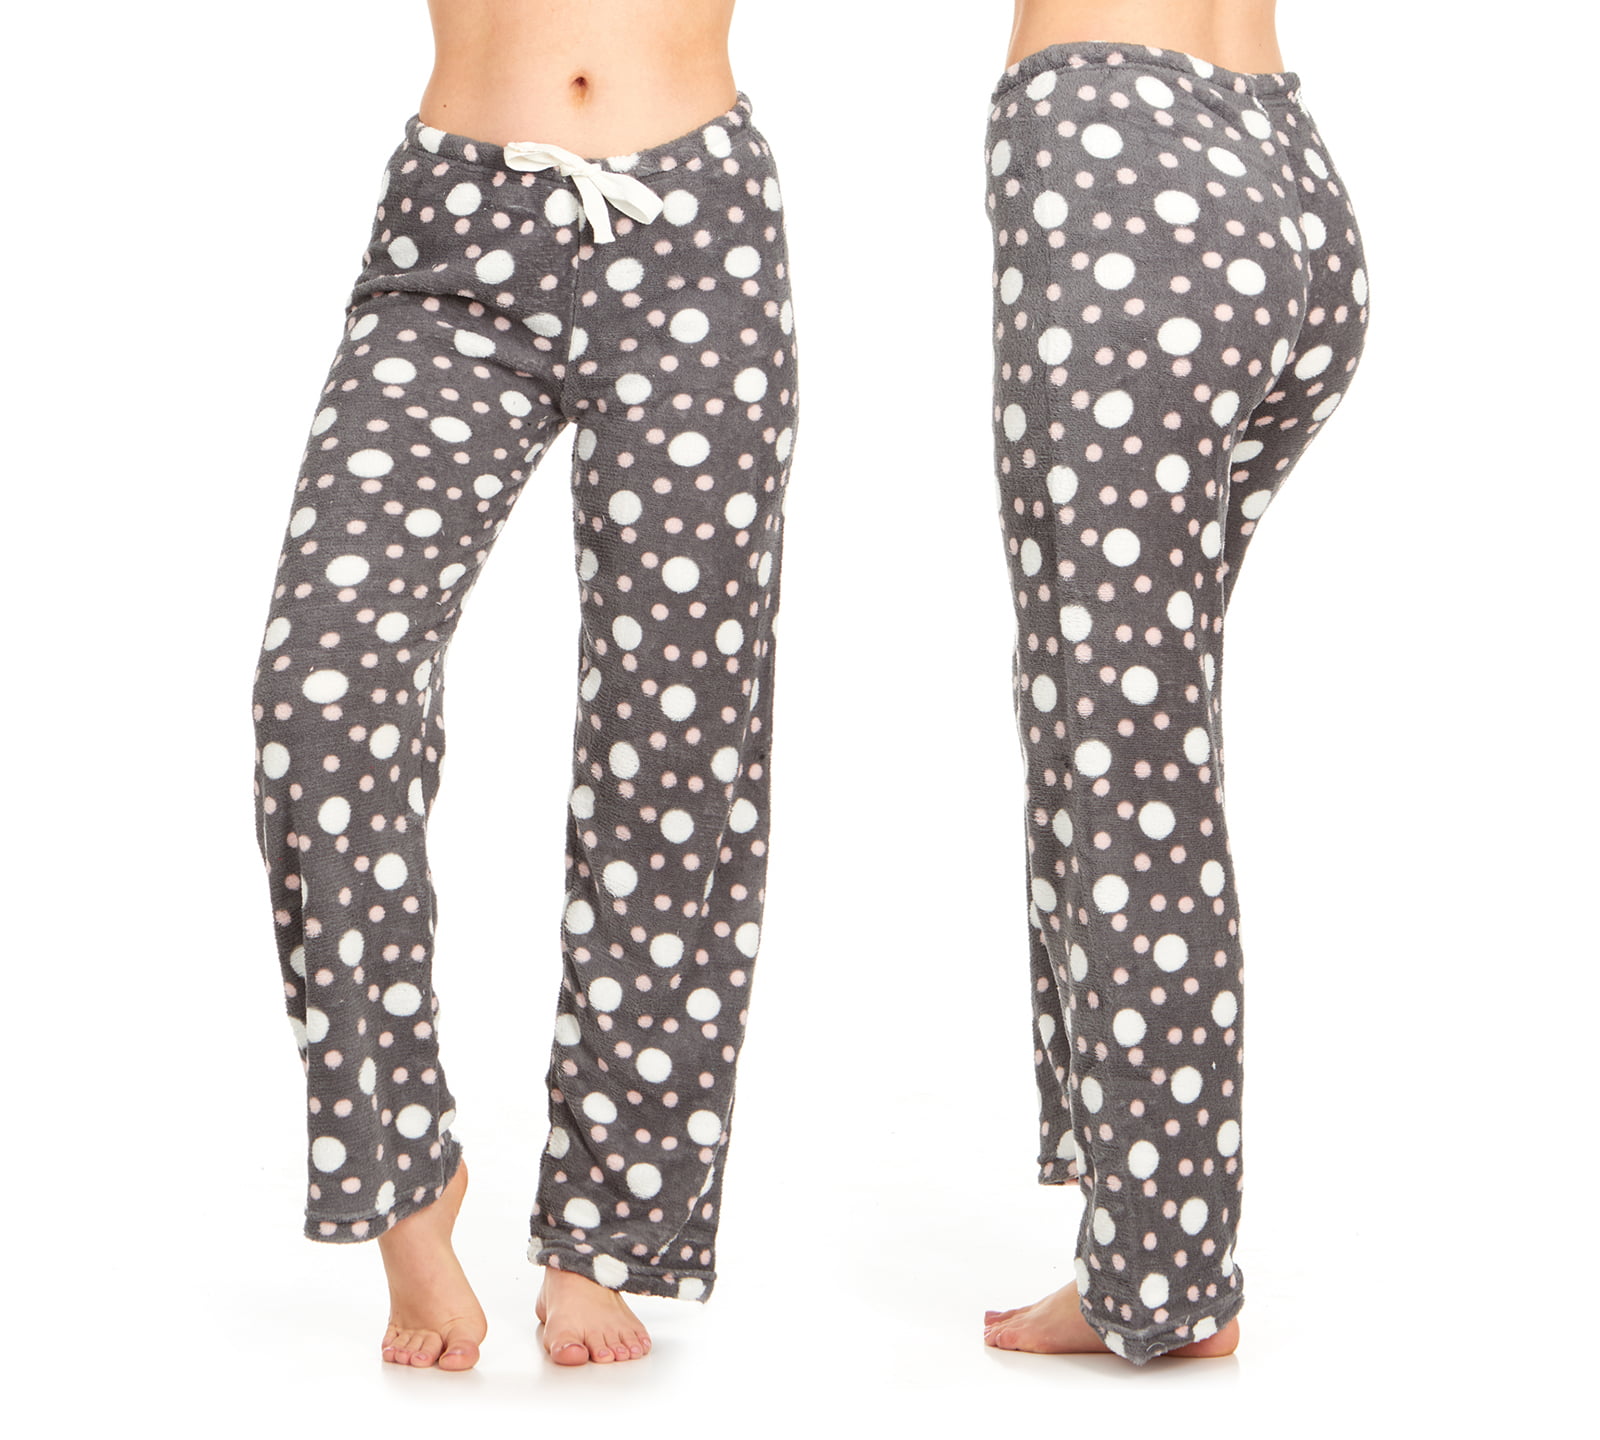 DARESAY 3 Pack: Women's Super-Soft Plush Fleece Pajama Bottoms 